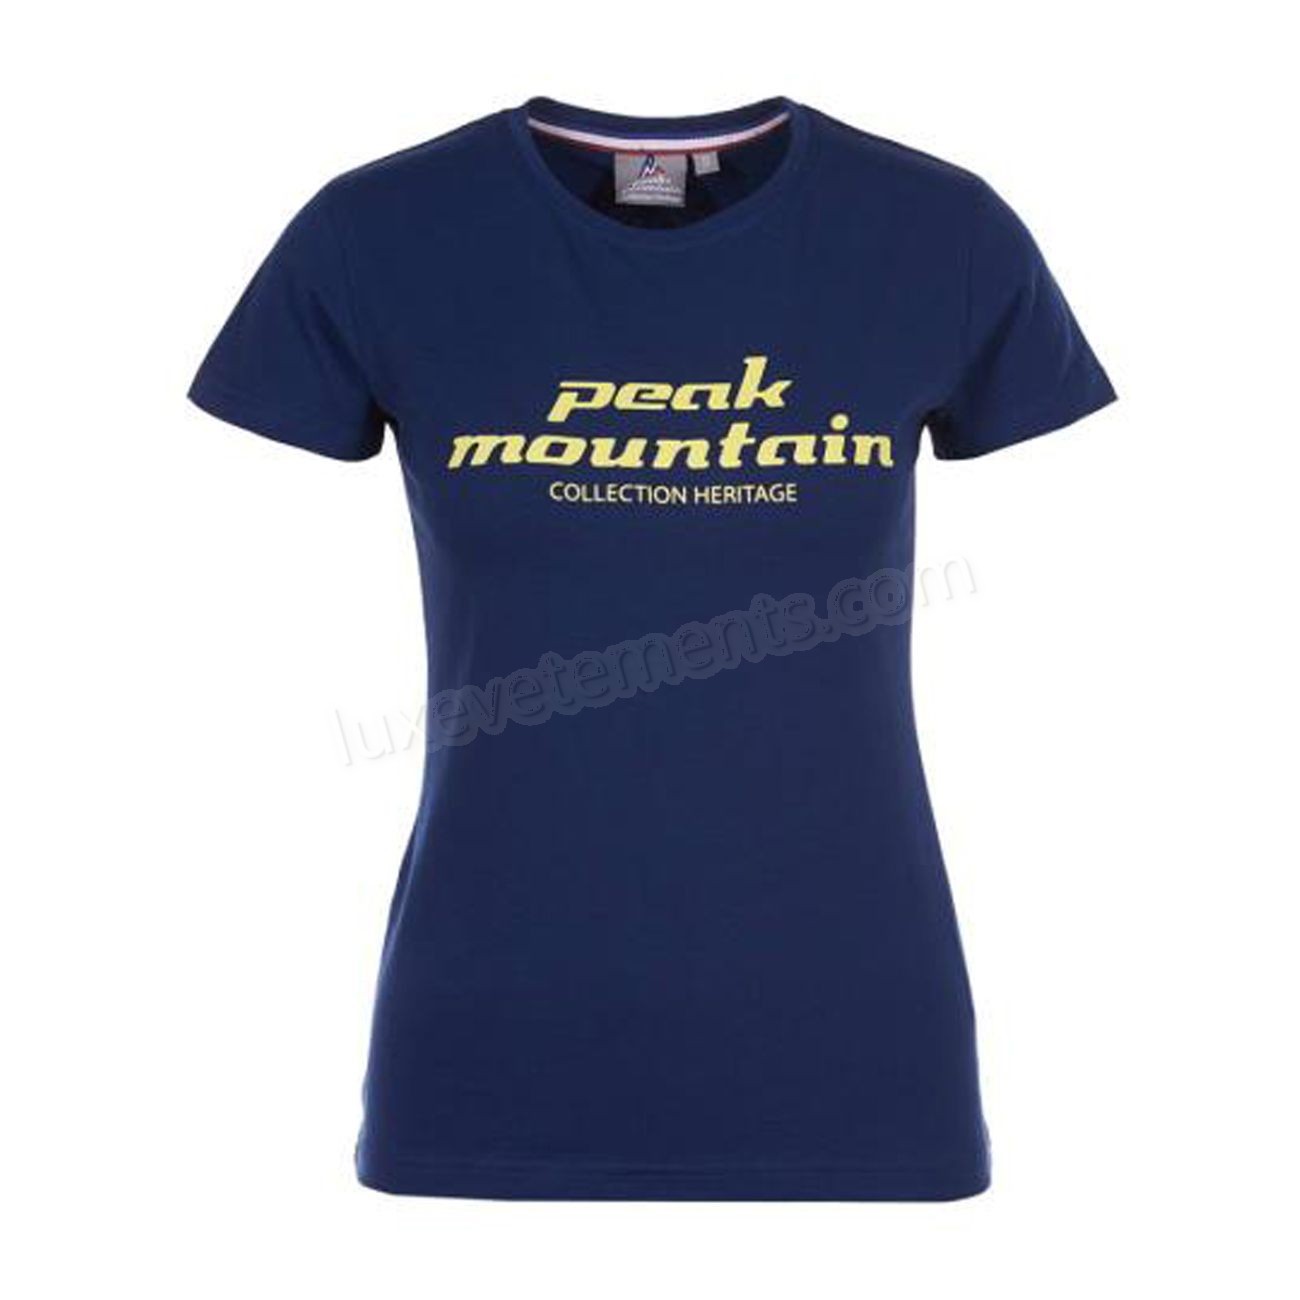 Peak Mountain-Mode- Lifestyle femme PEAK MOUNTAIN ACOSMO-marine-L Vente en ligne - Peak Mountain-Mode- Lifestyle femme PEAK MOUNTAIN ACOSMO-marine-L Vente en ligne